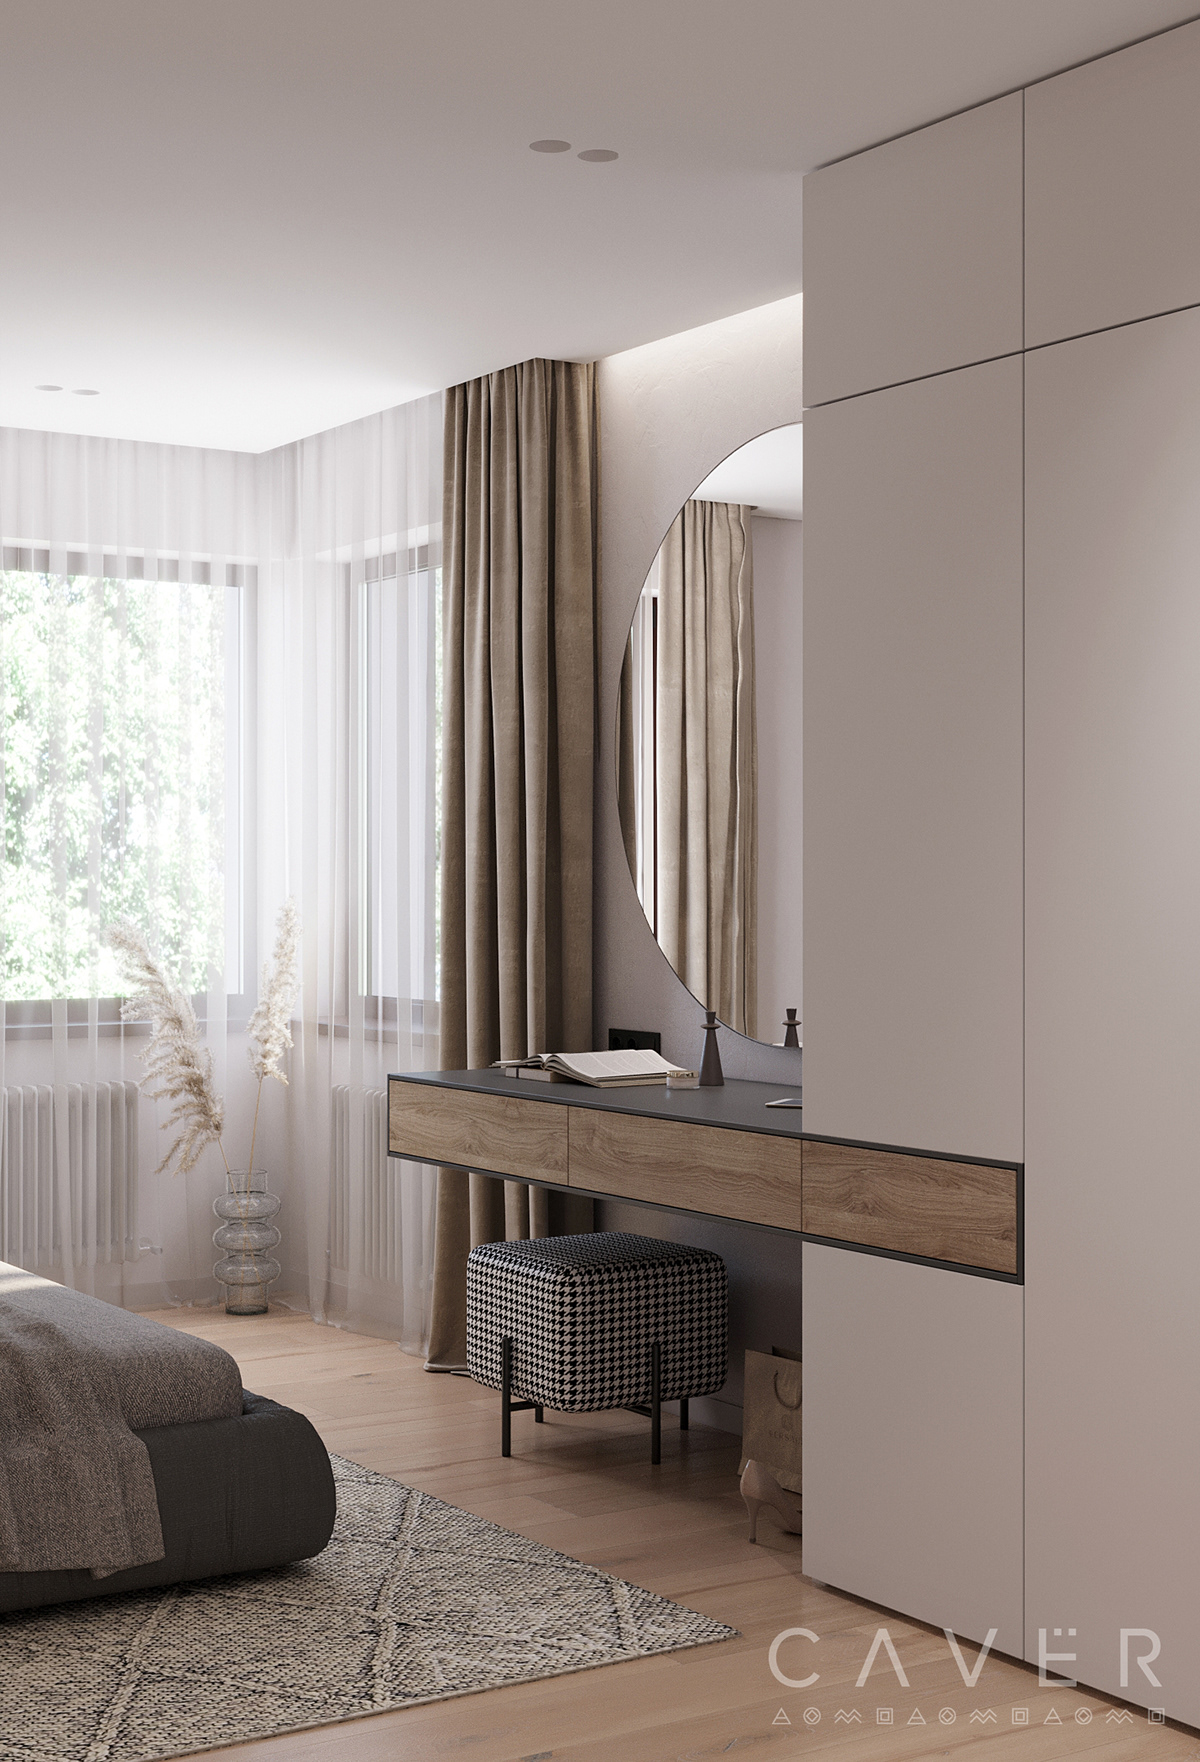 3ds max archviz bedroom CGI interior design  minimal modern vray дизайн интерьера спальня